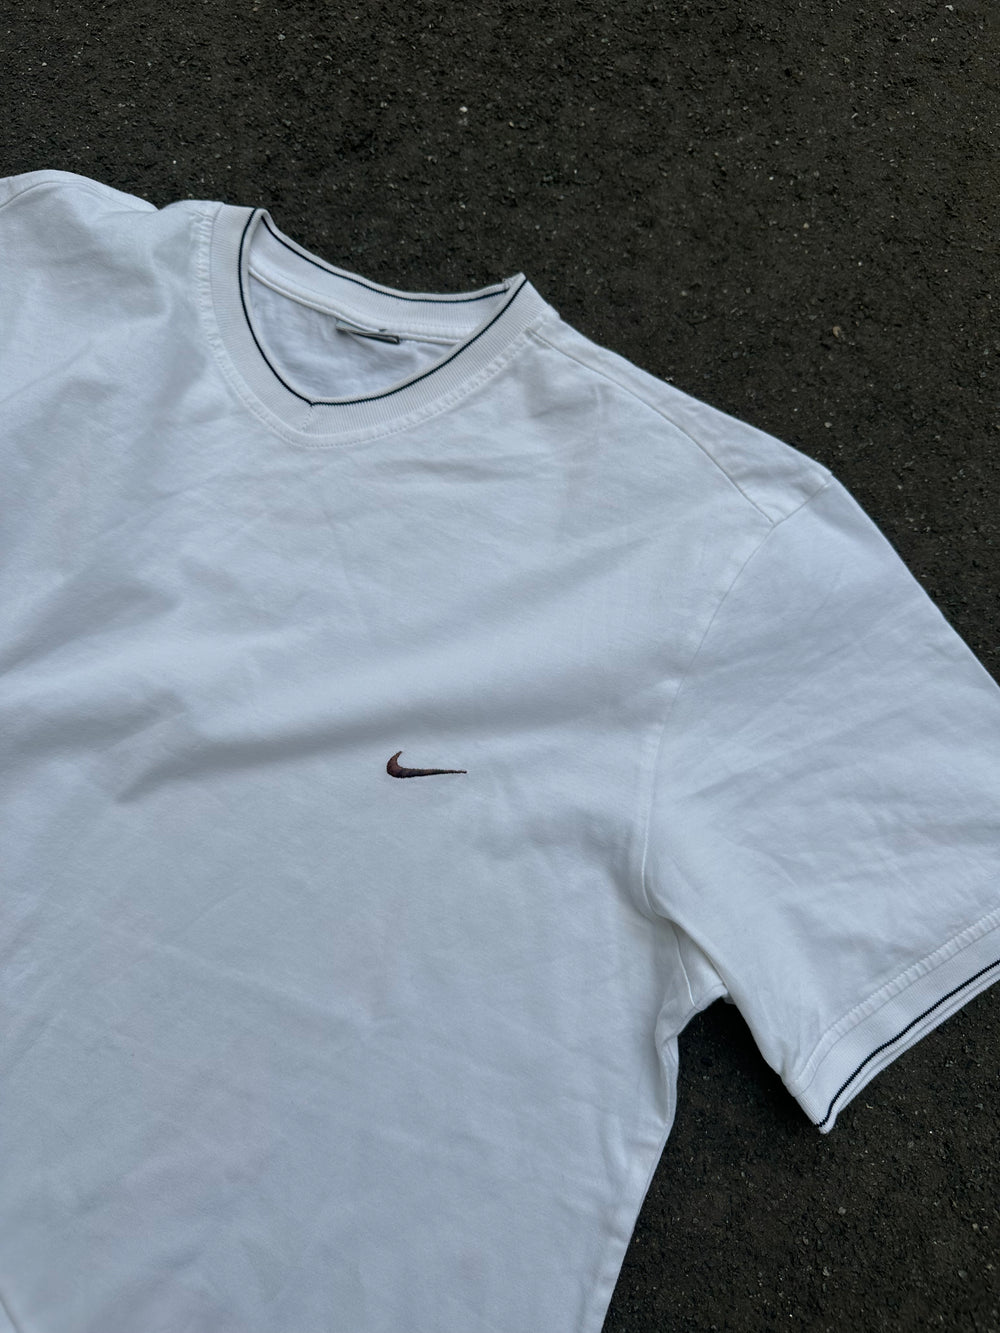 Early 2000s Nike T-Shirt (L/XL)